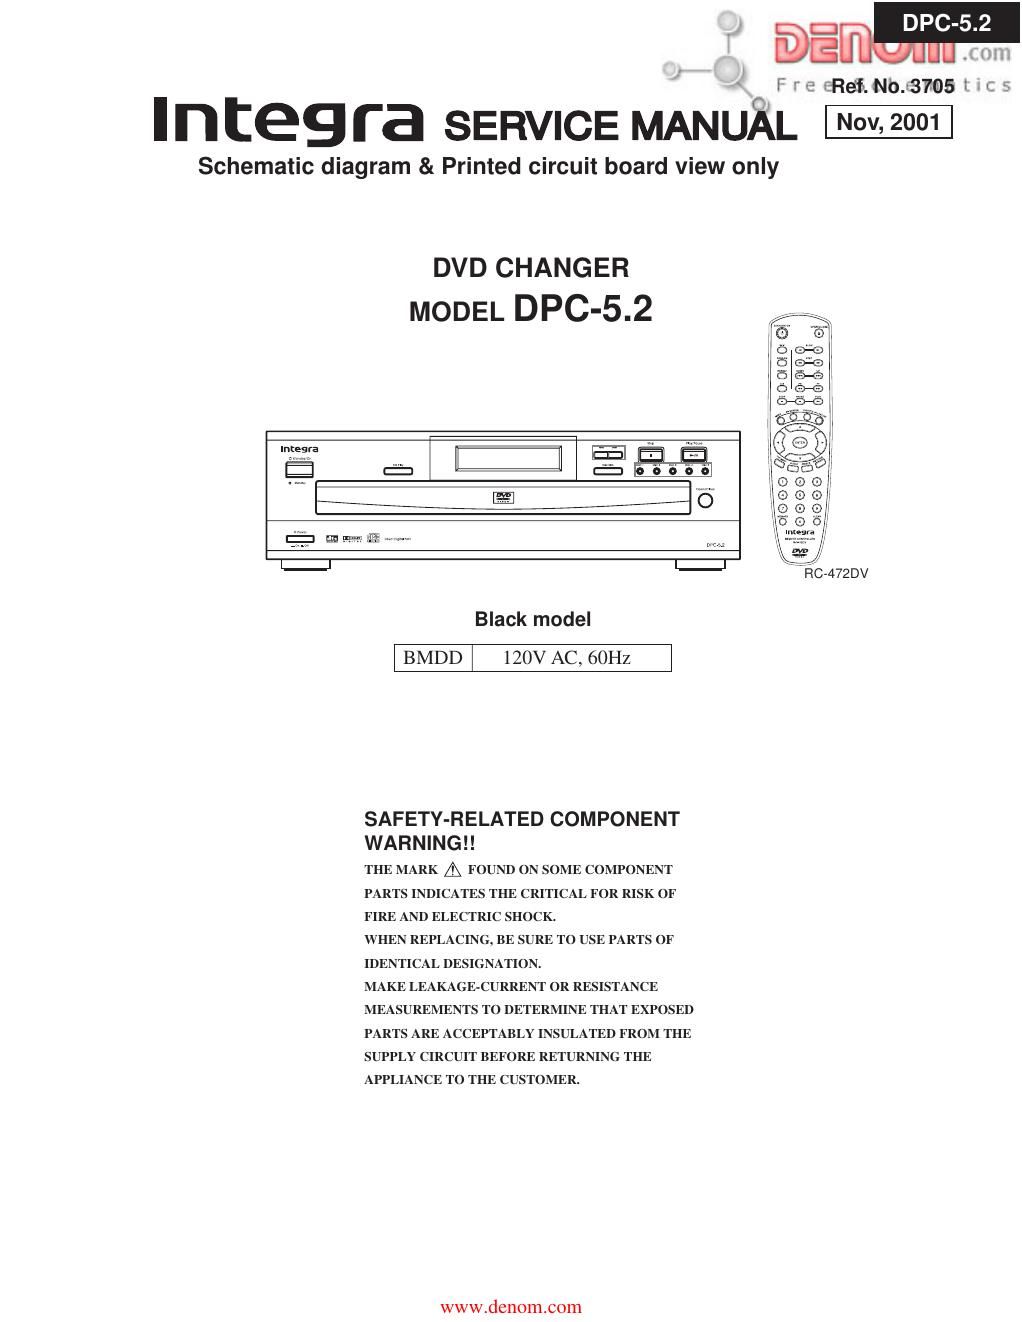 integra dpc 5 2 service manual